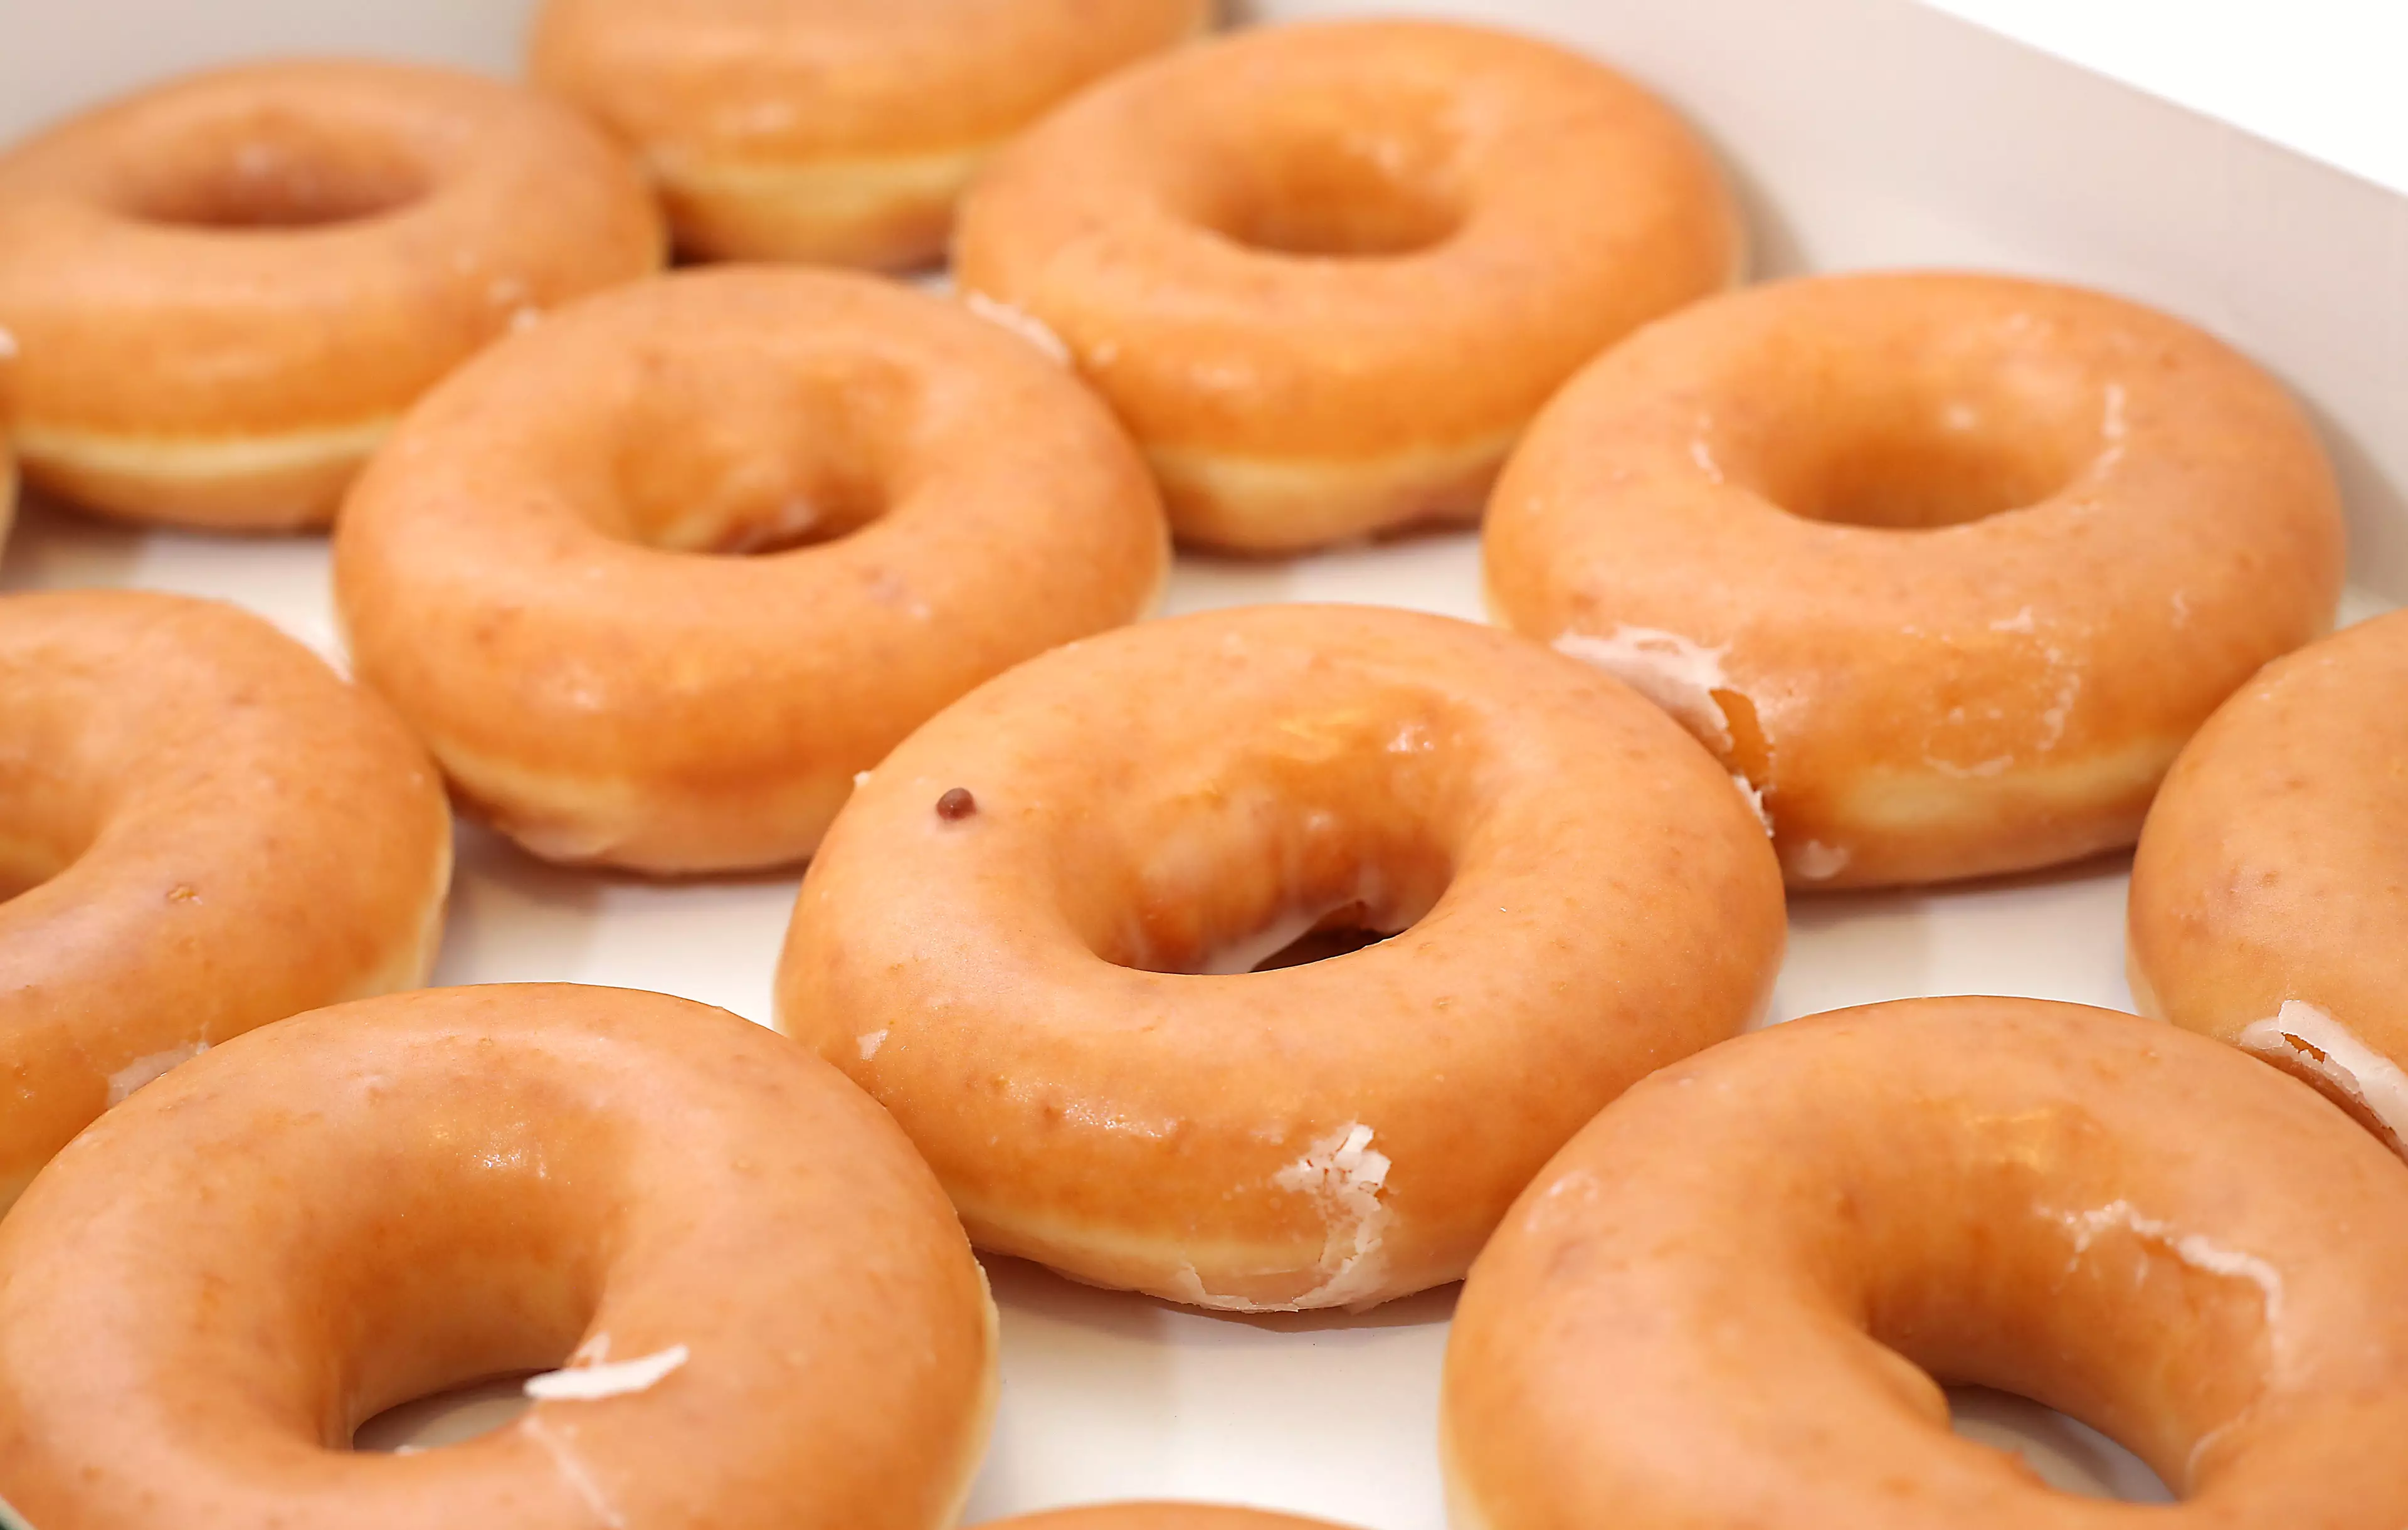 The vegan Original Glazed doughnuts look similar to the non-vegan doughnuts (